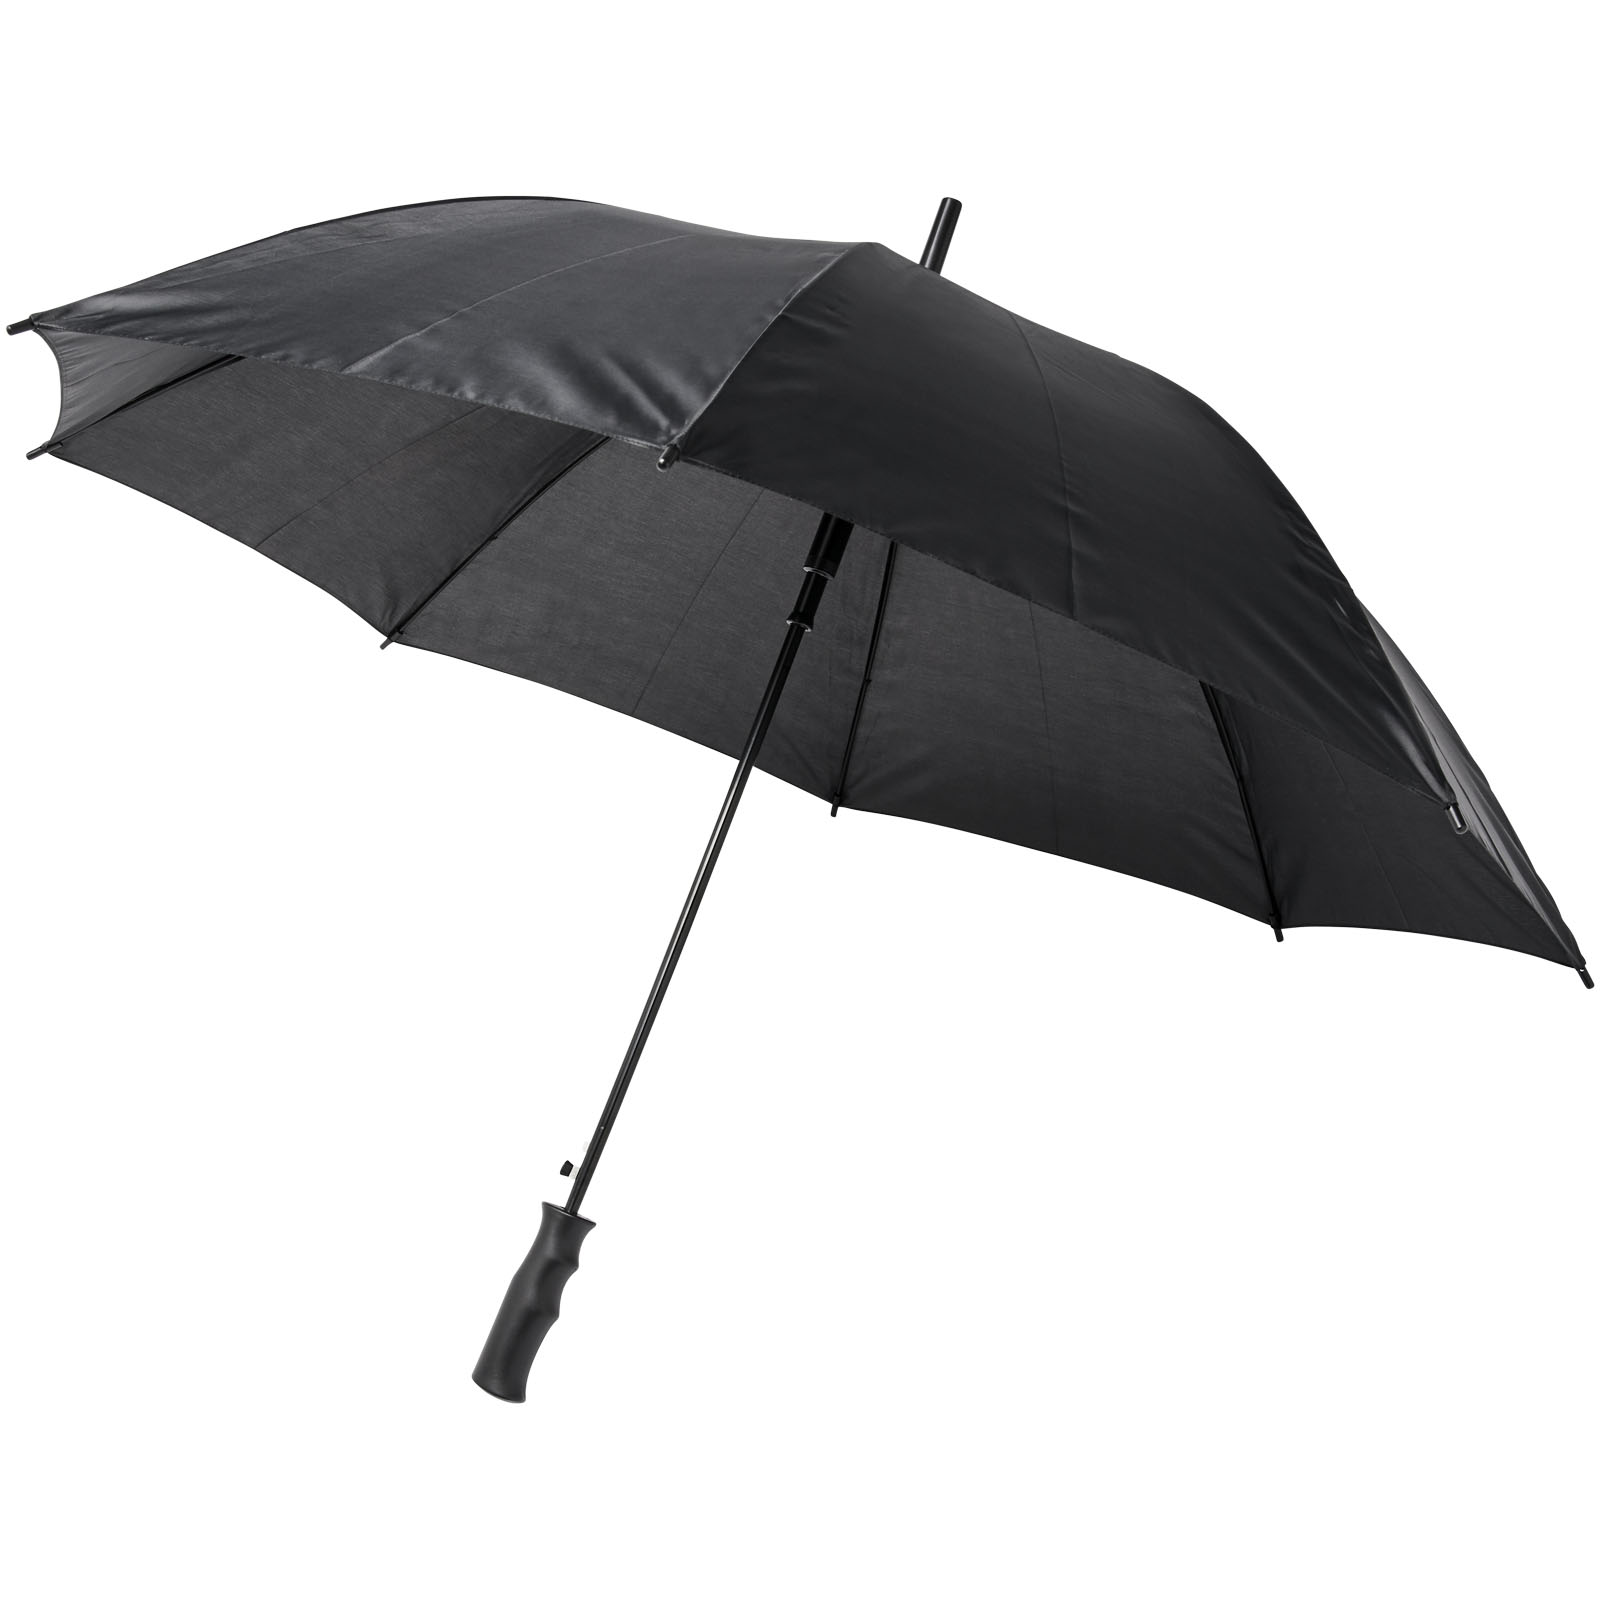 Flexi Umbrella - Bletchley - Newtown Linford